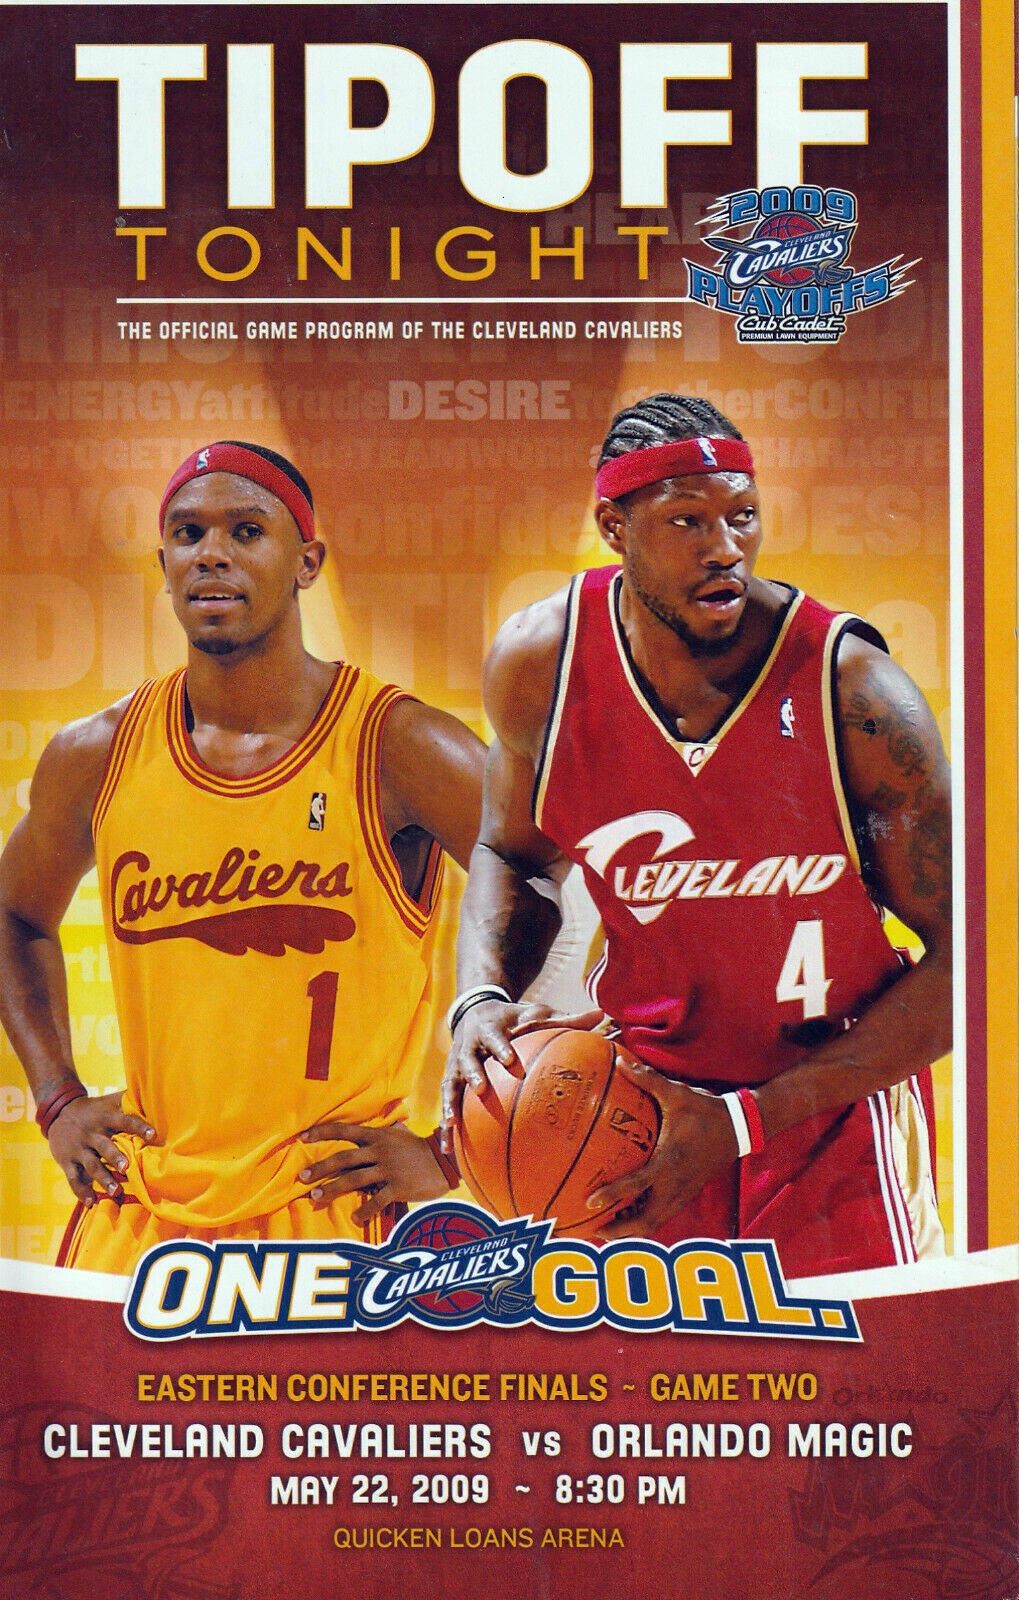 Cleveland Cavaliers vs. Orlando Magic (May 22, 2009)